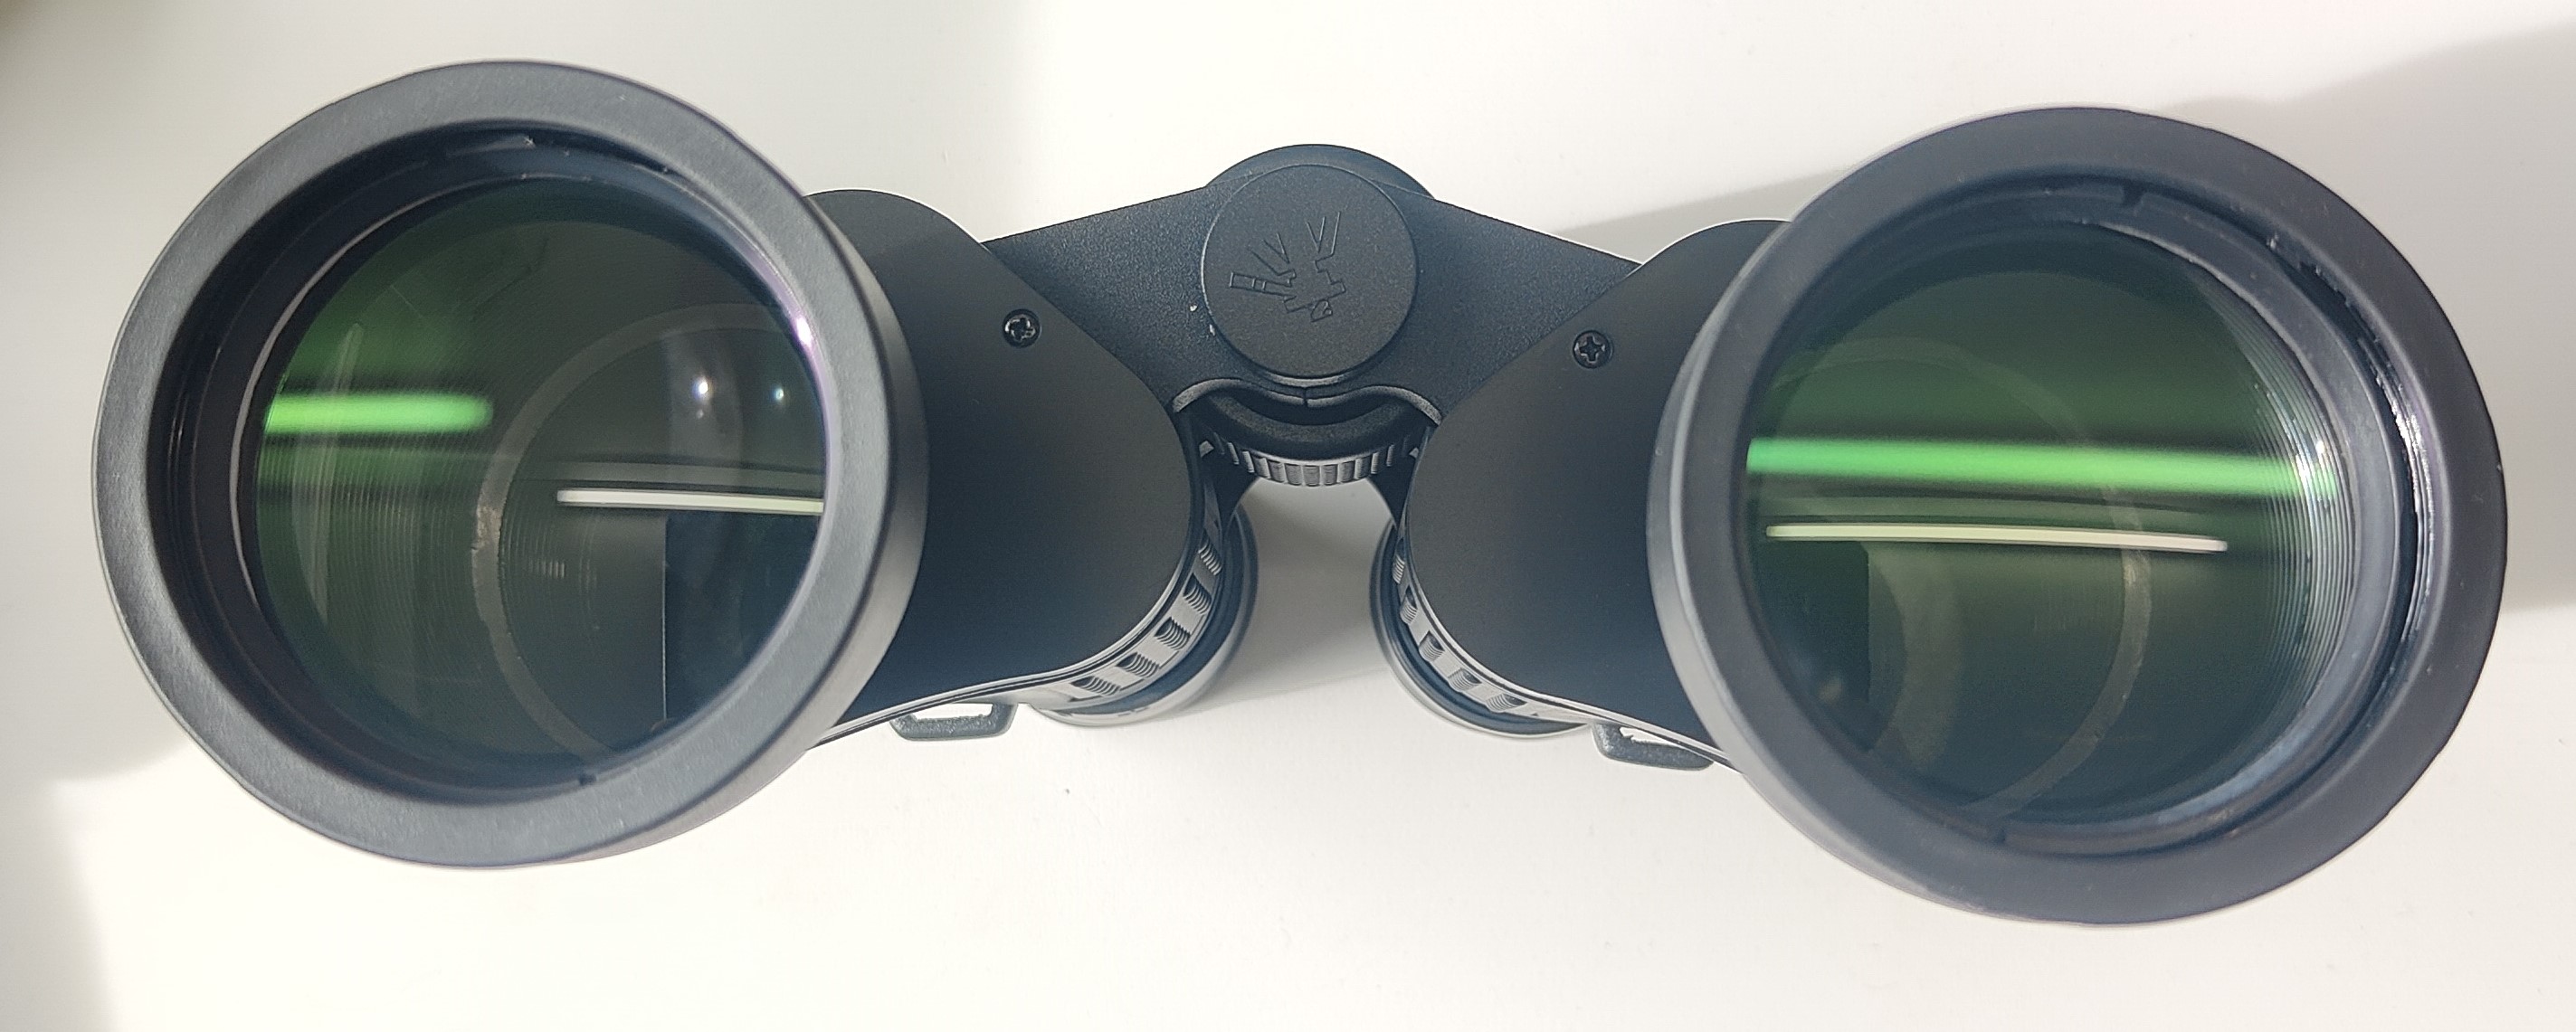 Vetus BINO1 Water Resistant Binoculars